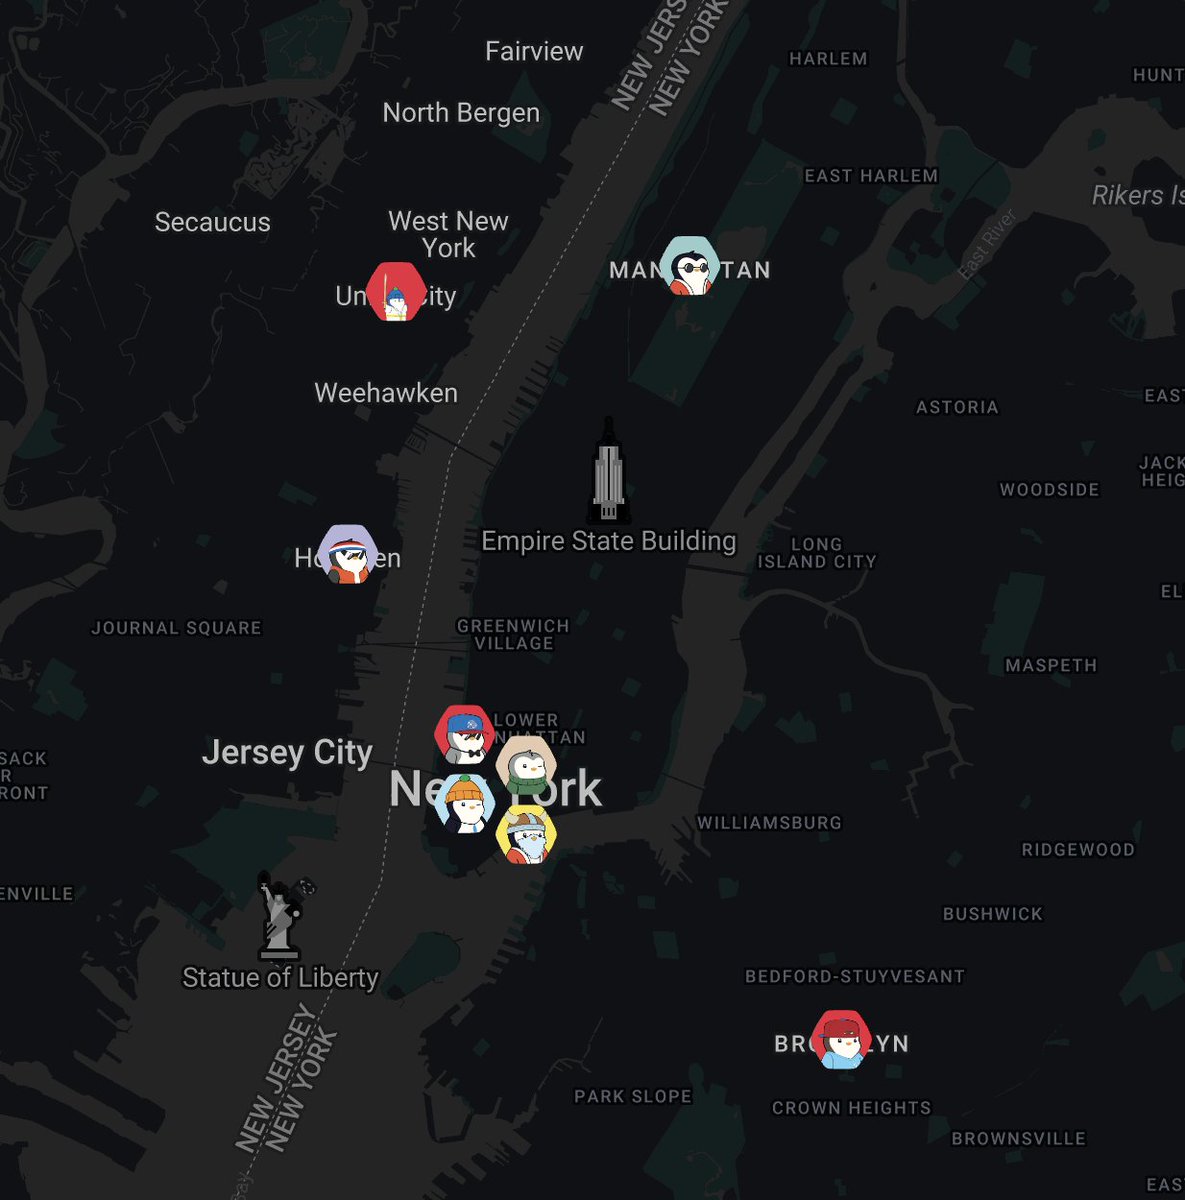 Officially on the map with my NYC pengus, bullish 

Add yours: community.pudgypenguins.com/pudgy-penguins…

@MiletimeCinema @MrEdwardNYC @sauceror__ @JoeyCoinz @ckttam @yincity @Capt_Chubby